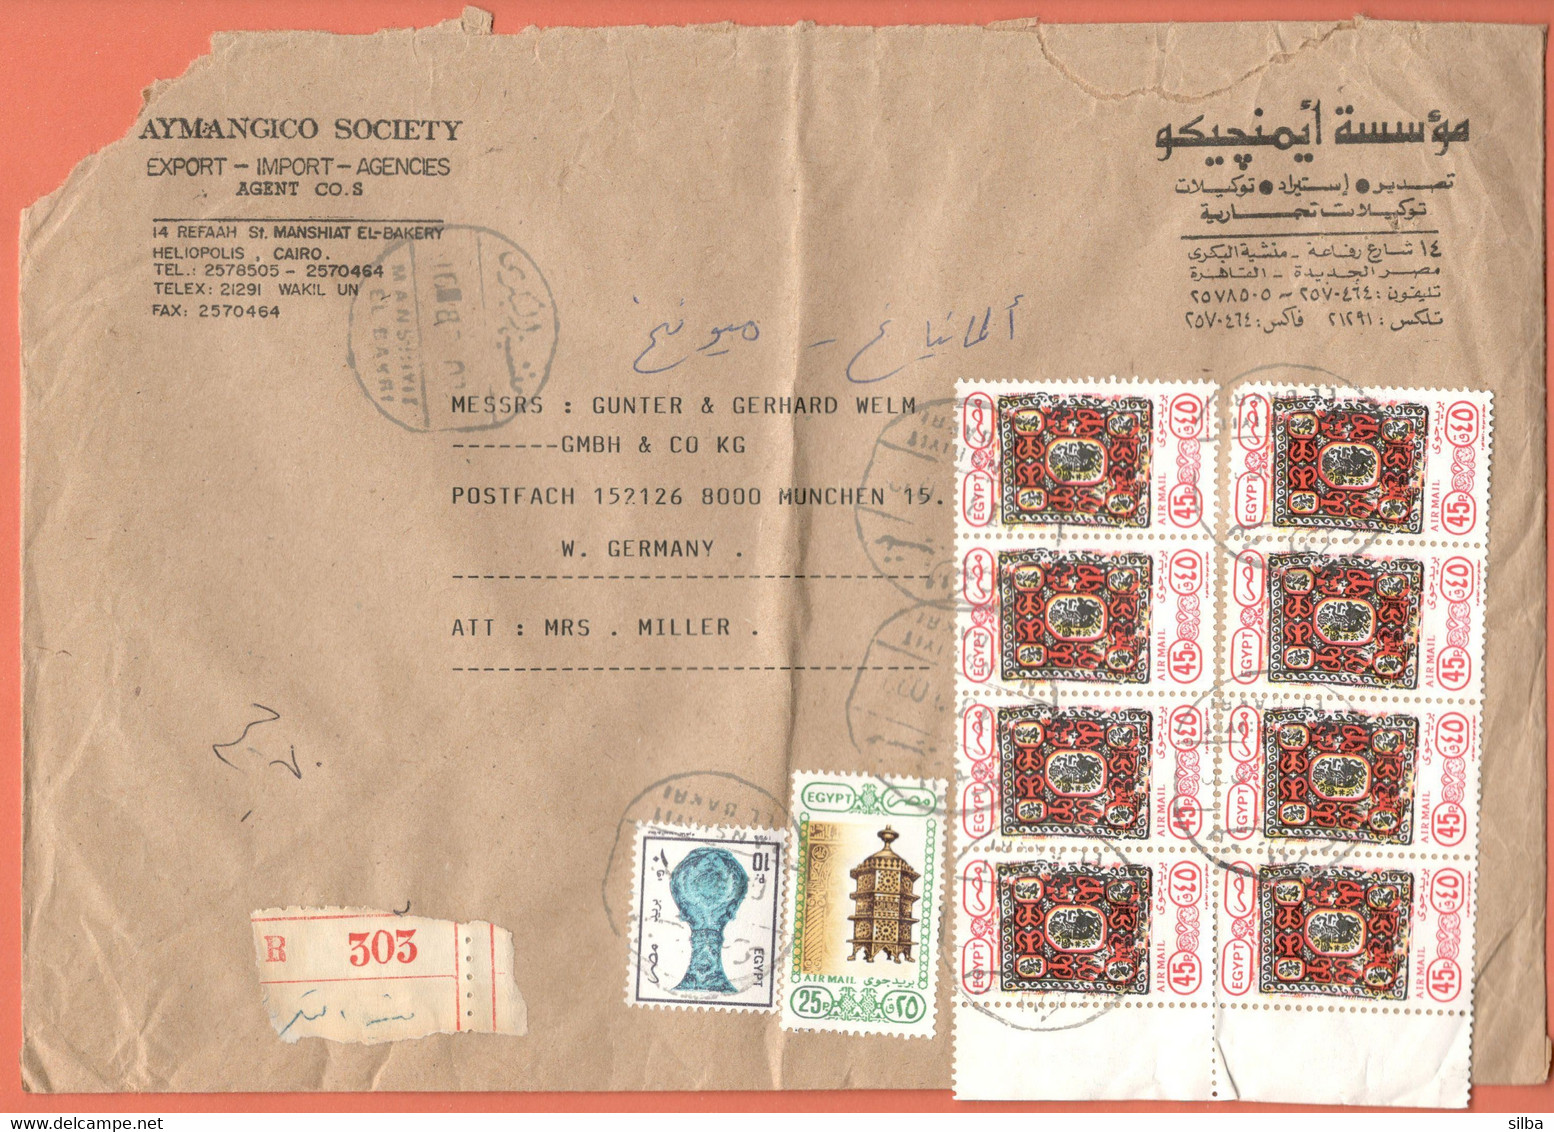 Egypt / Airmail - Art And Mosques, Carpet 45 P, Lantern 25 P, Vase 10 P, 1989 - Briefe U. Dokumente